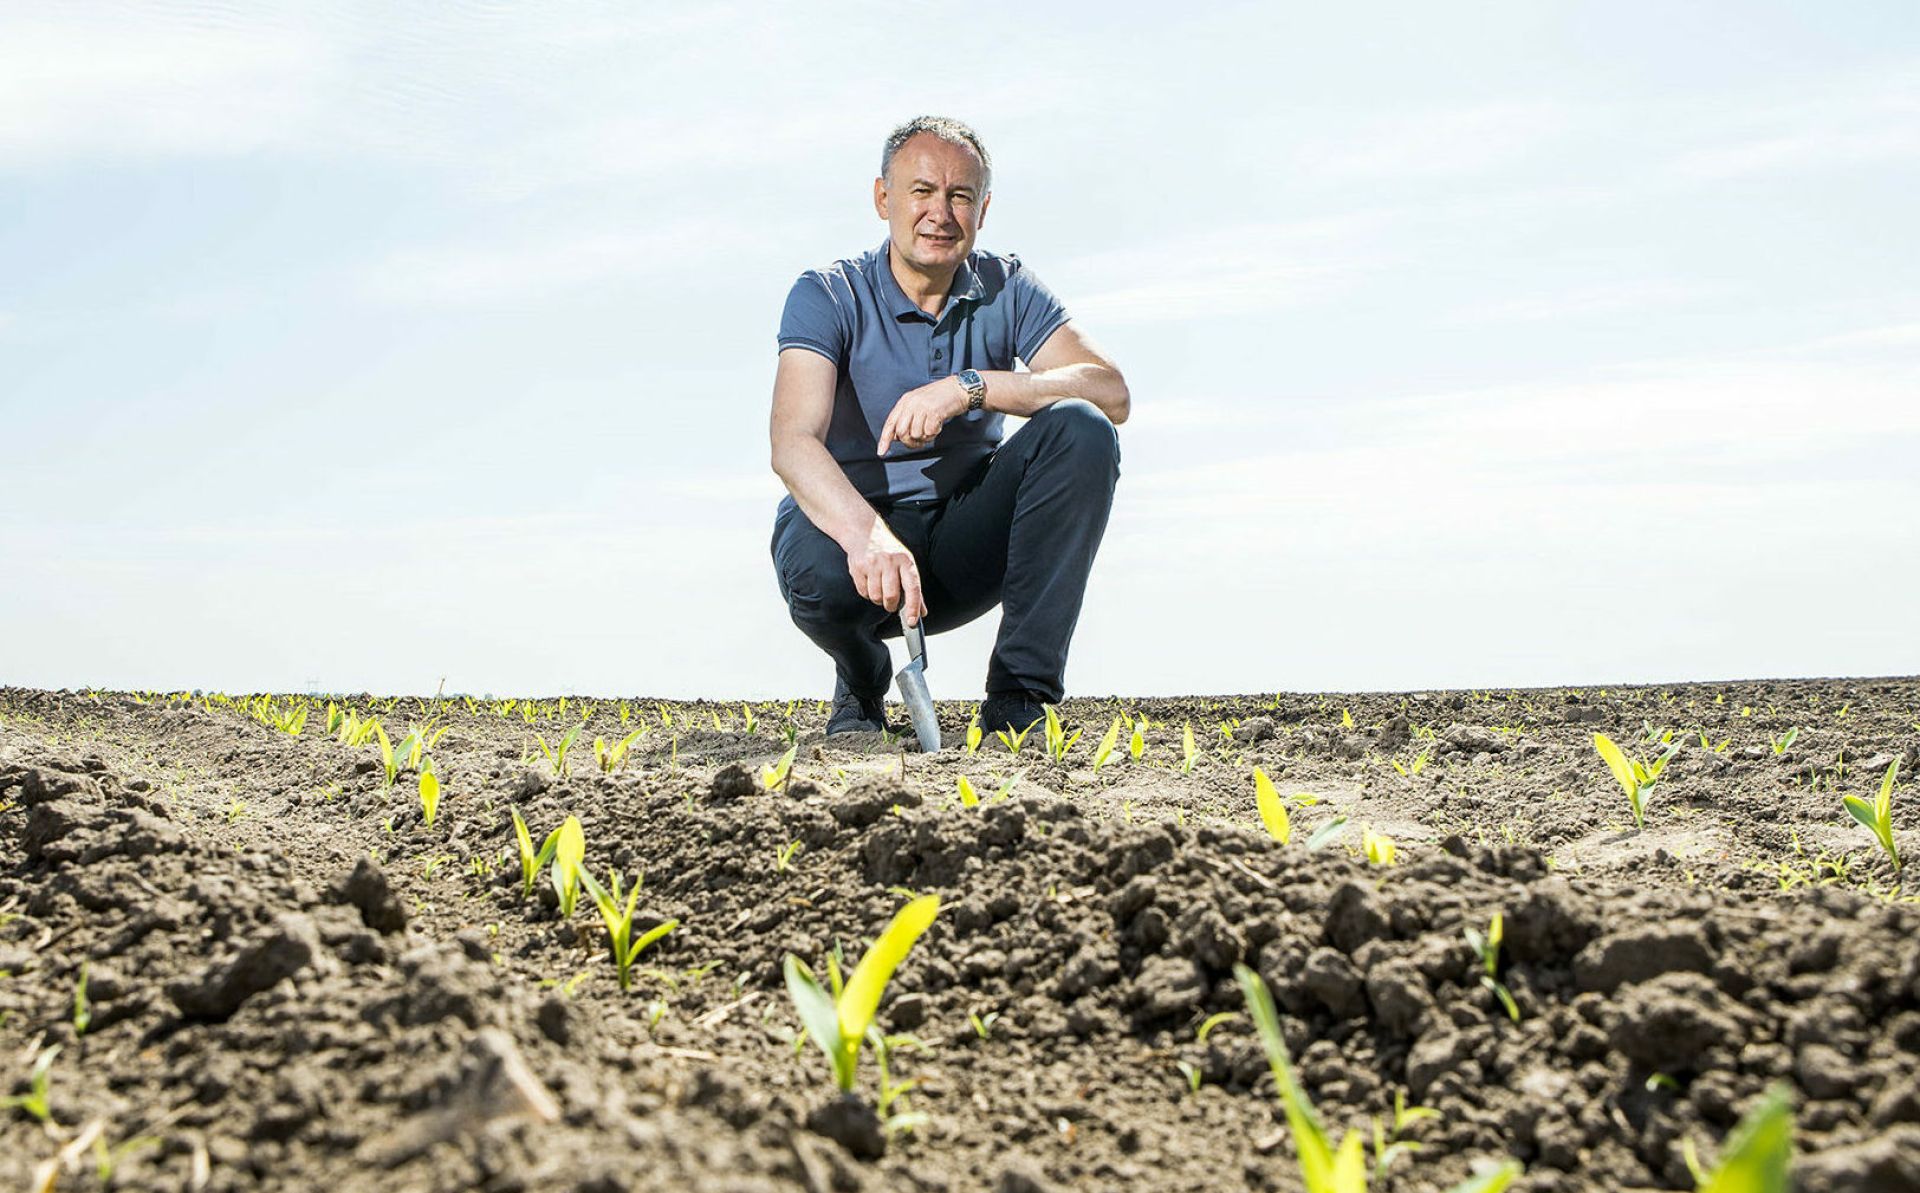 European Fund for Southeast Europe provides €5 million loan to partner Agroprosperis Bank to support Ukrainian farmers